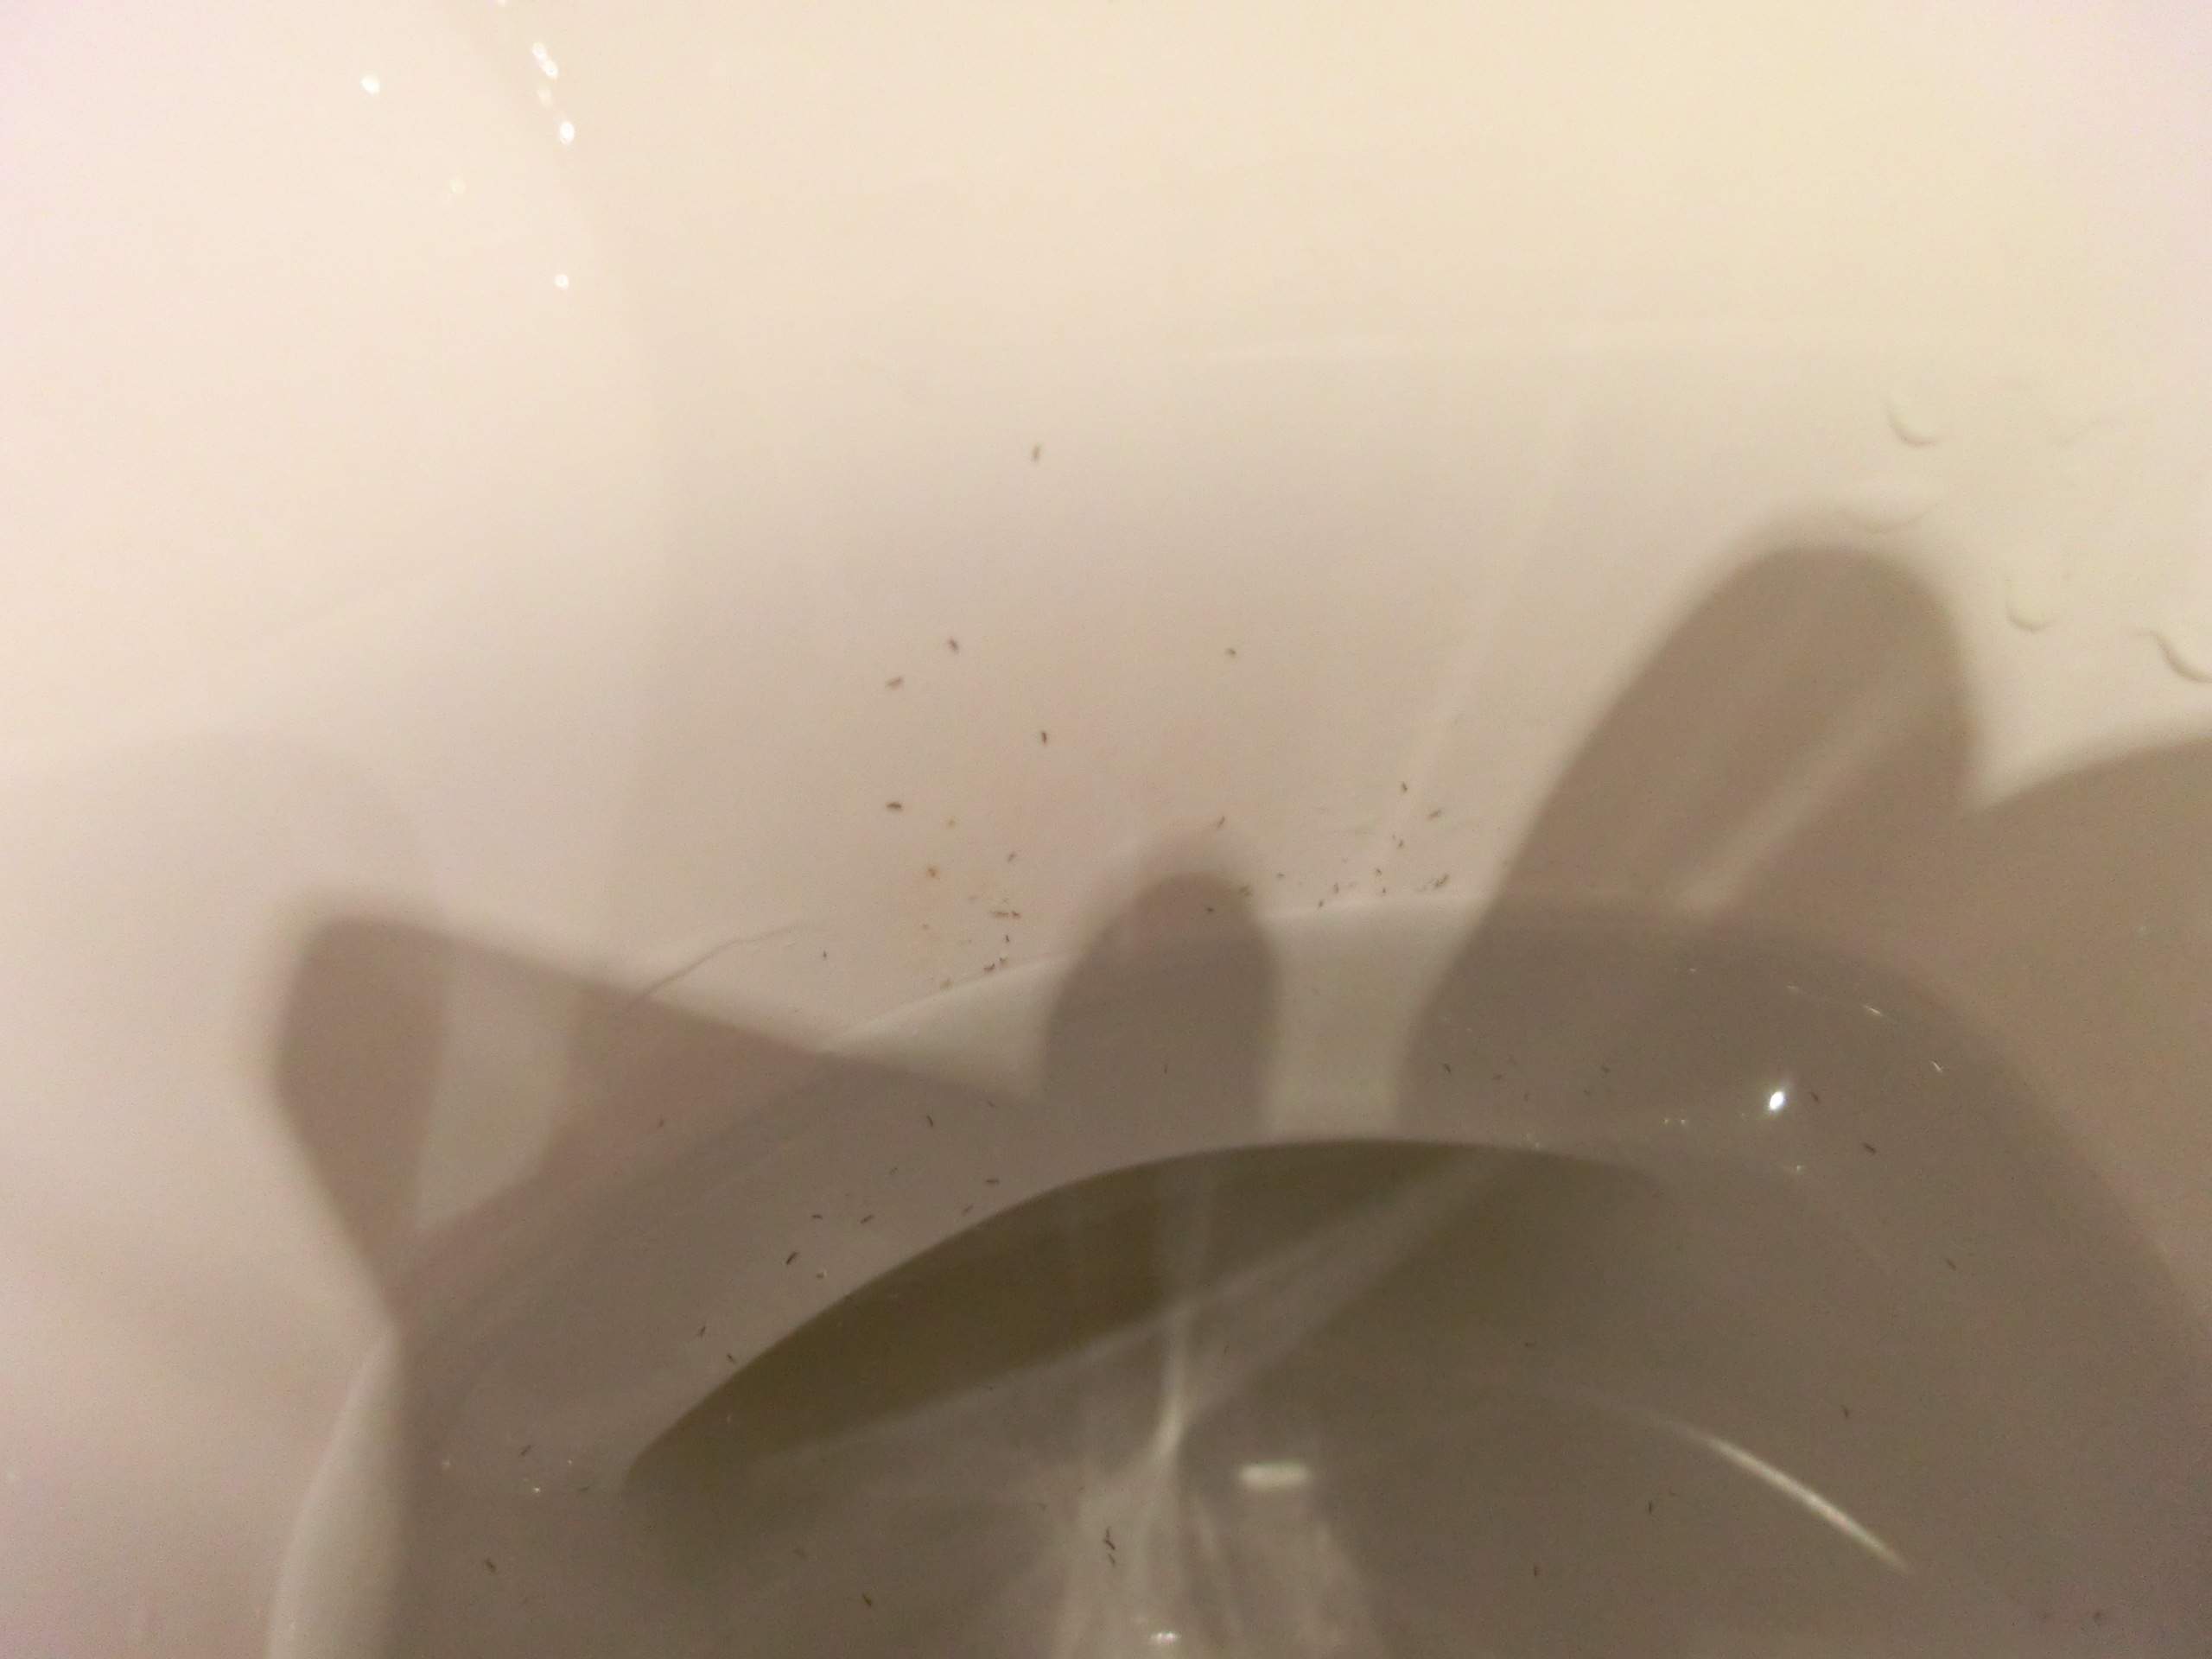 Schwarze würmer in toilette nach urlaub